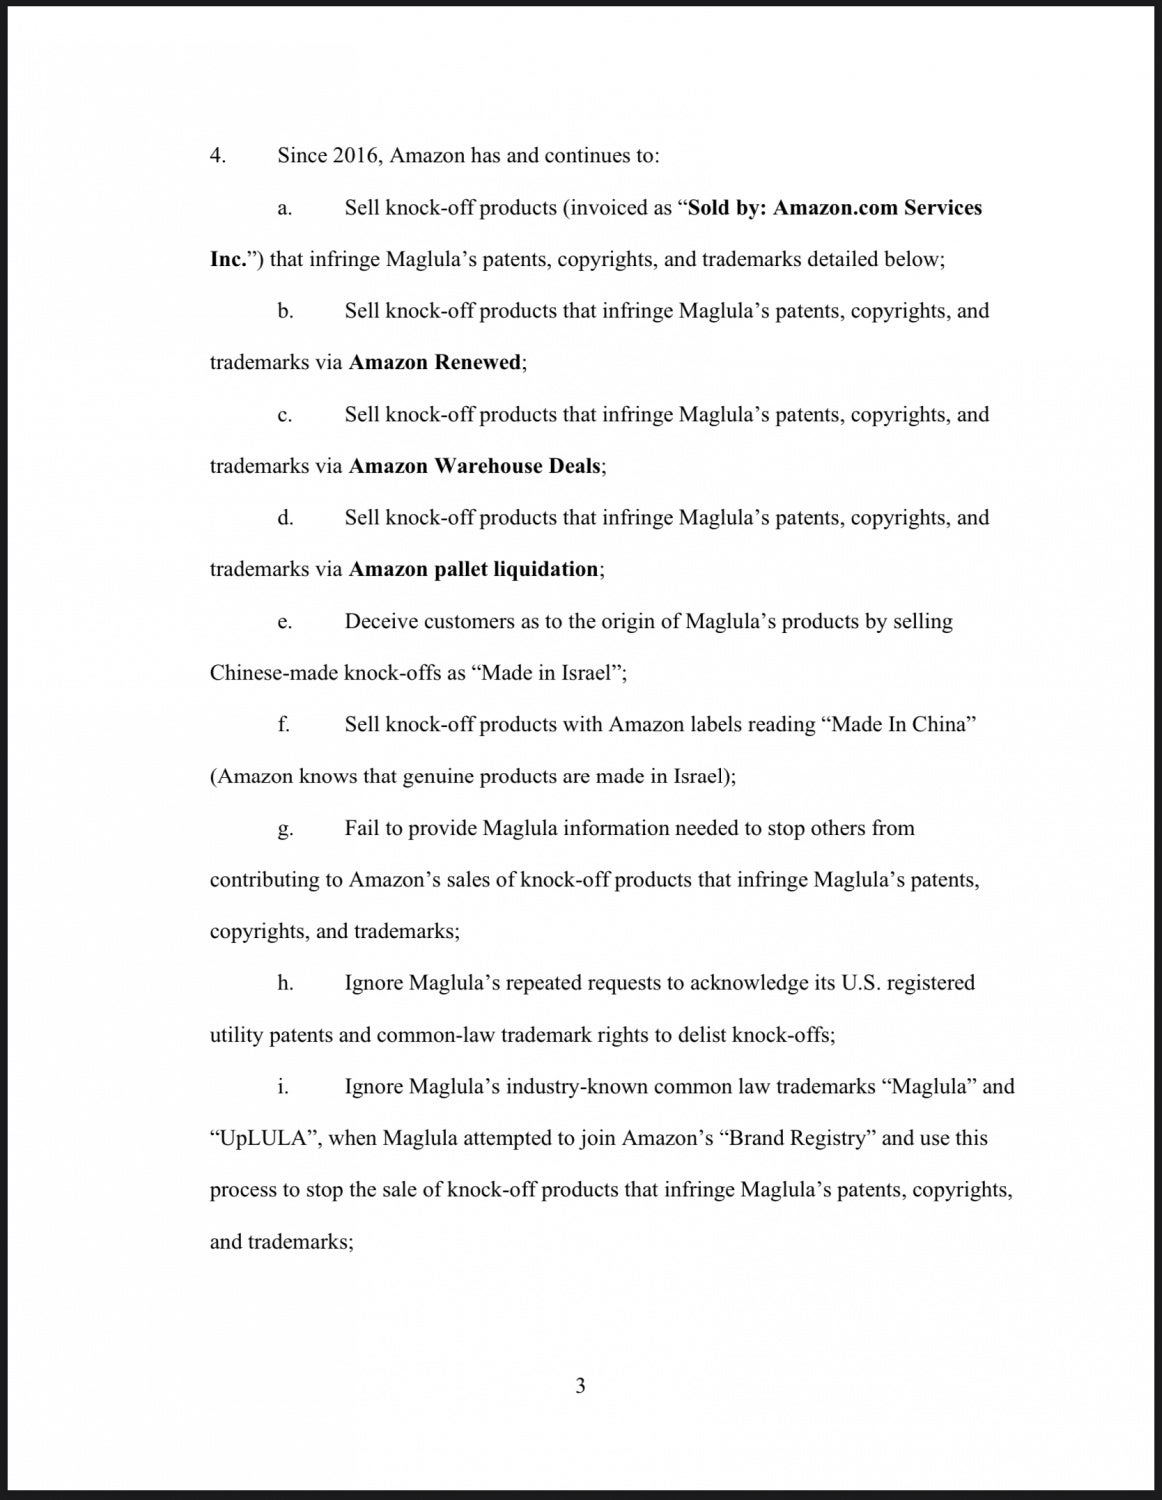 Maglula v. Amazon - Intellectual Property Rights Violations